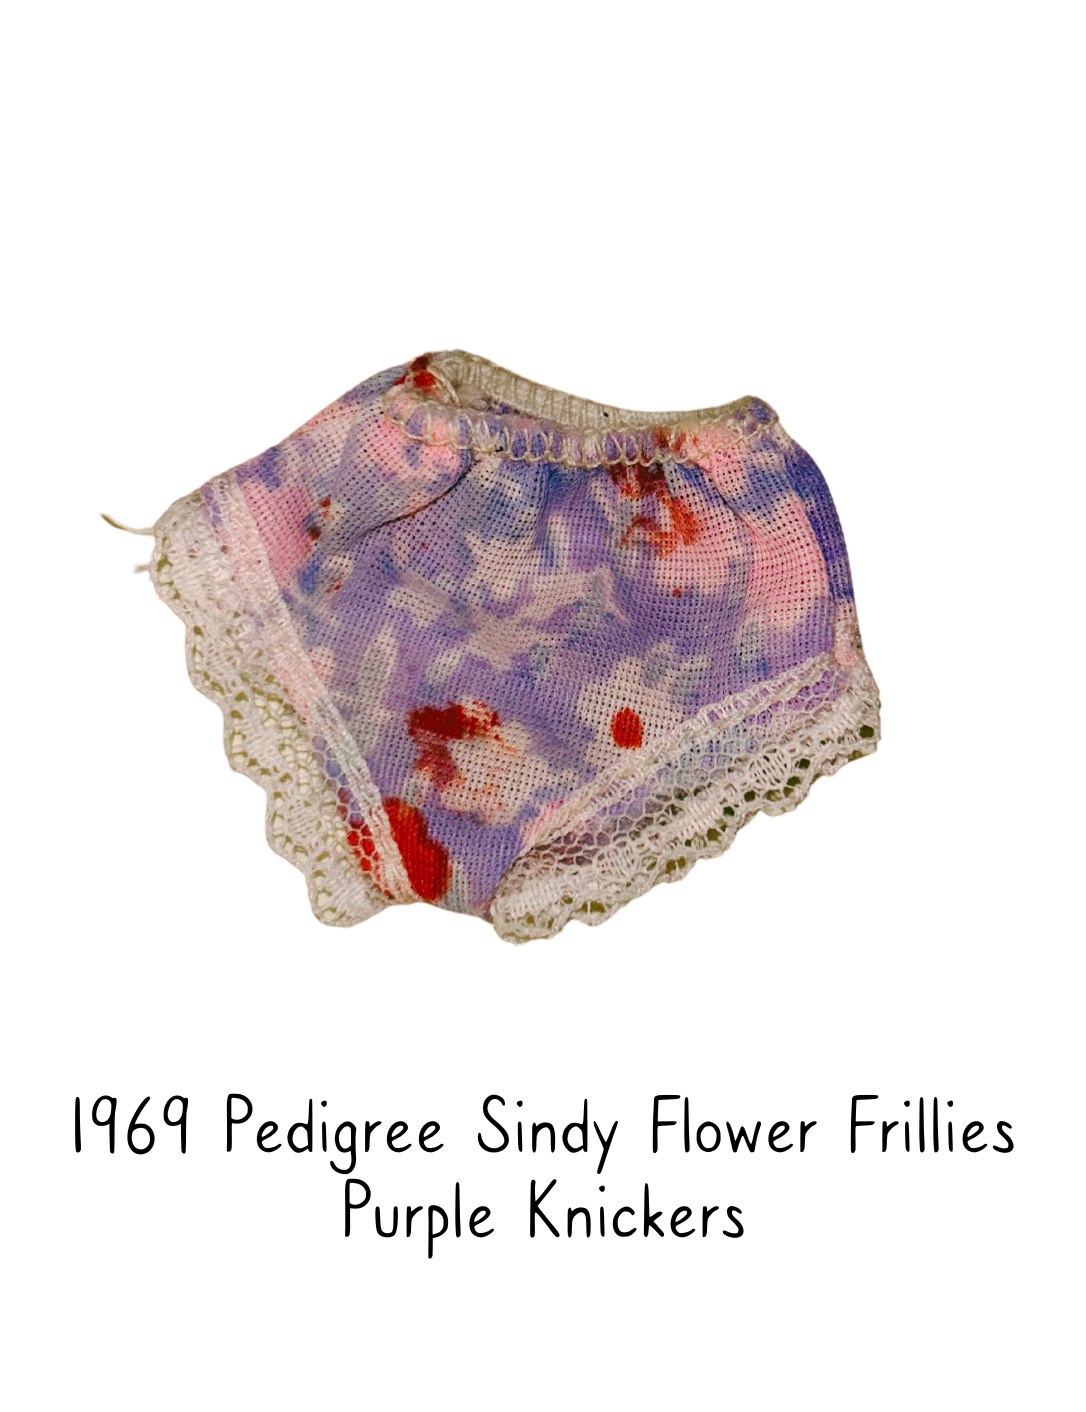 1969 Pedigree Sindy Flower Frillies Purple Knickers